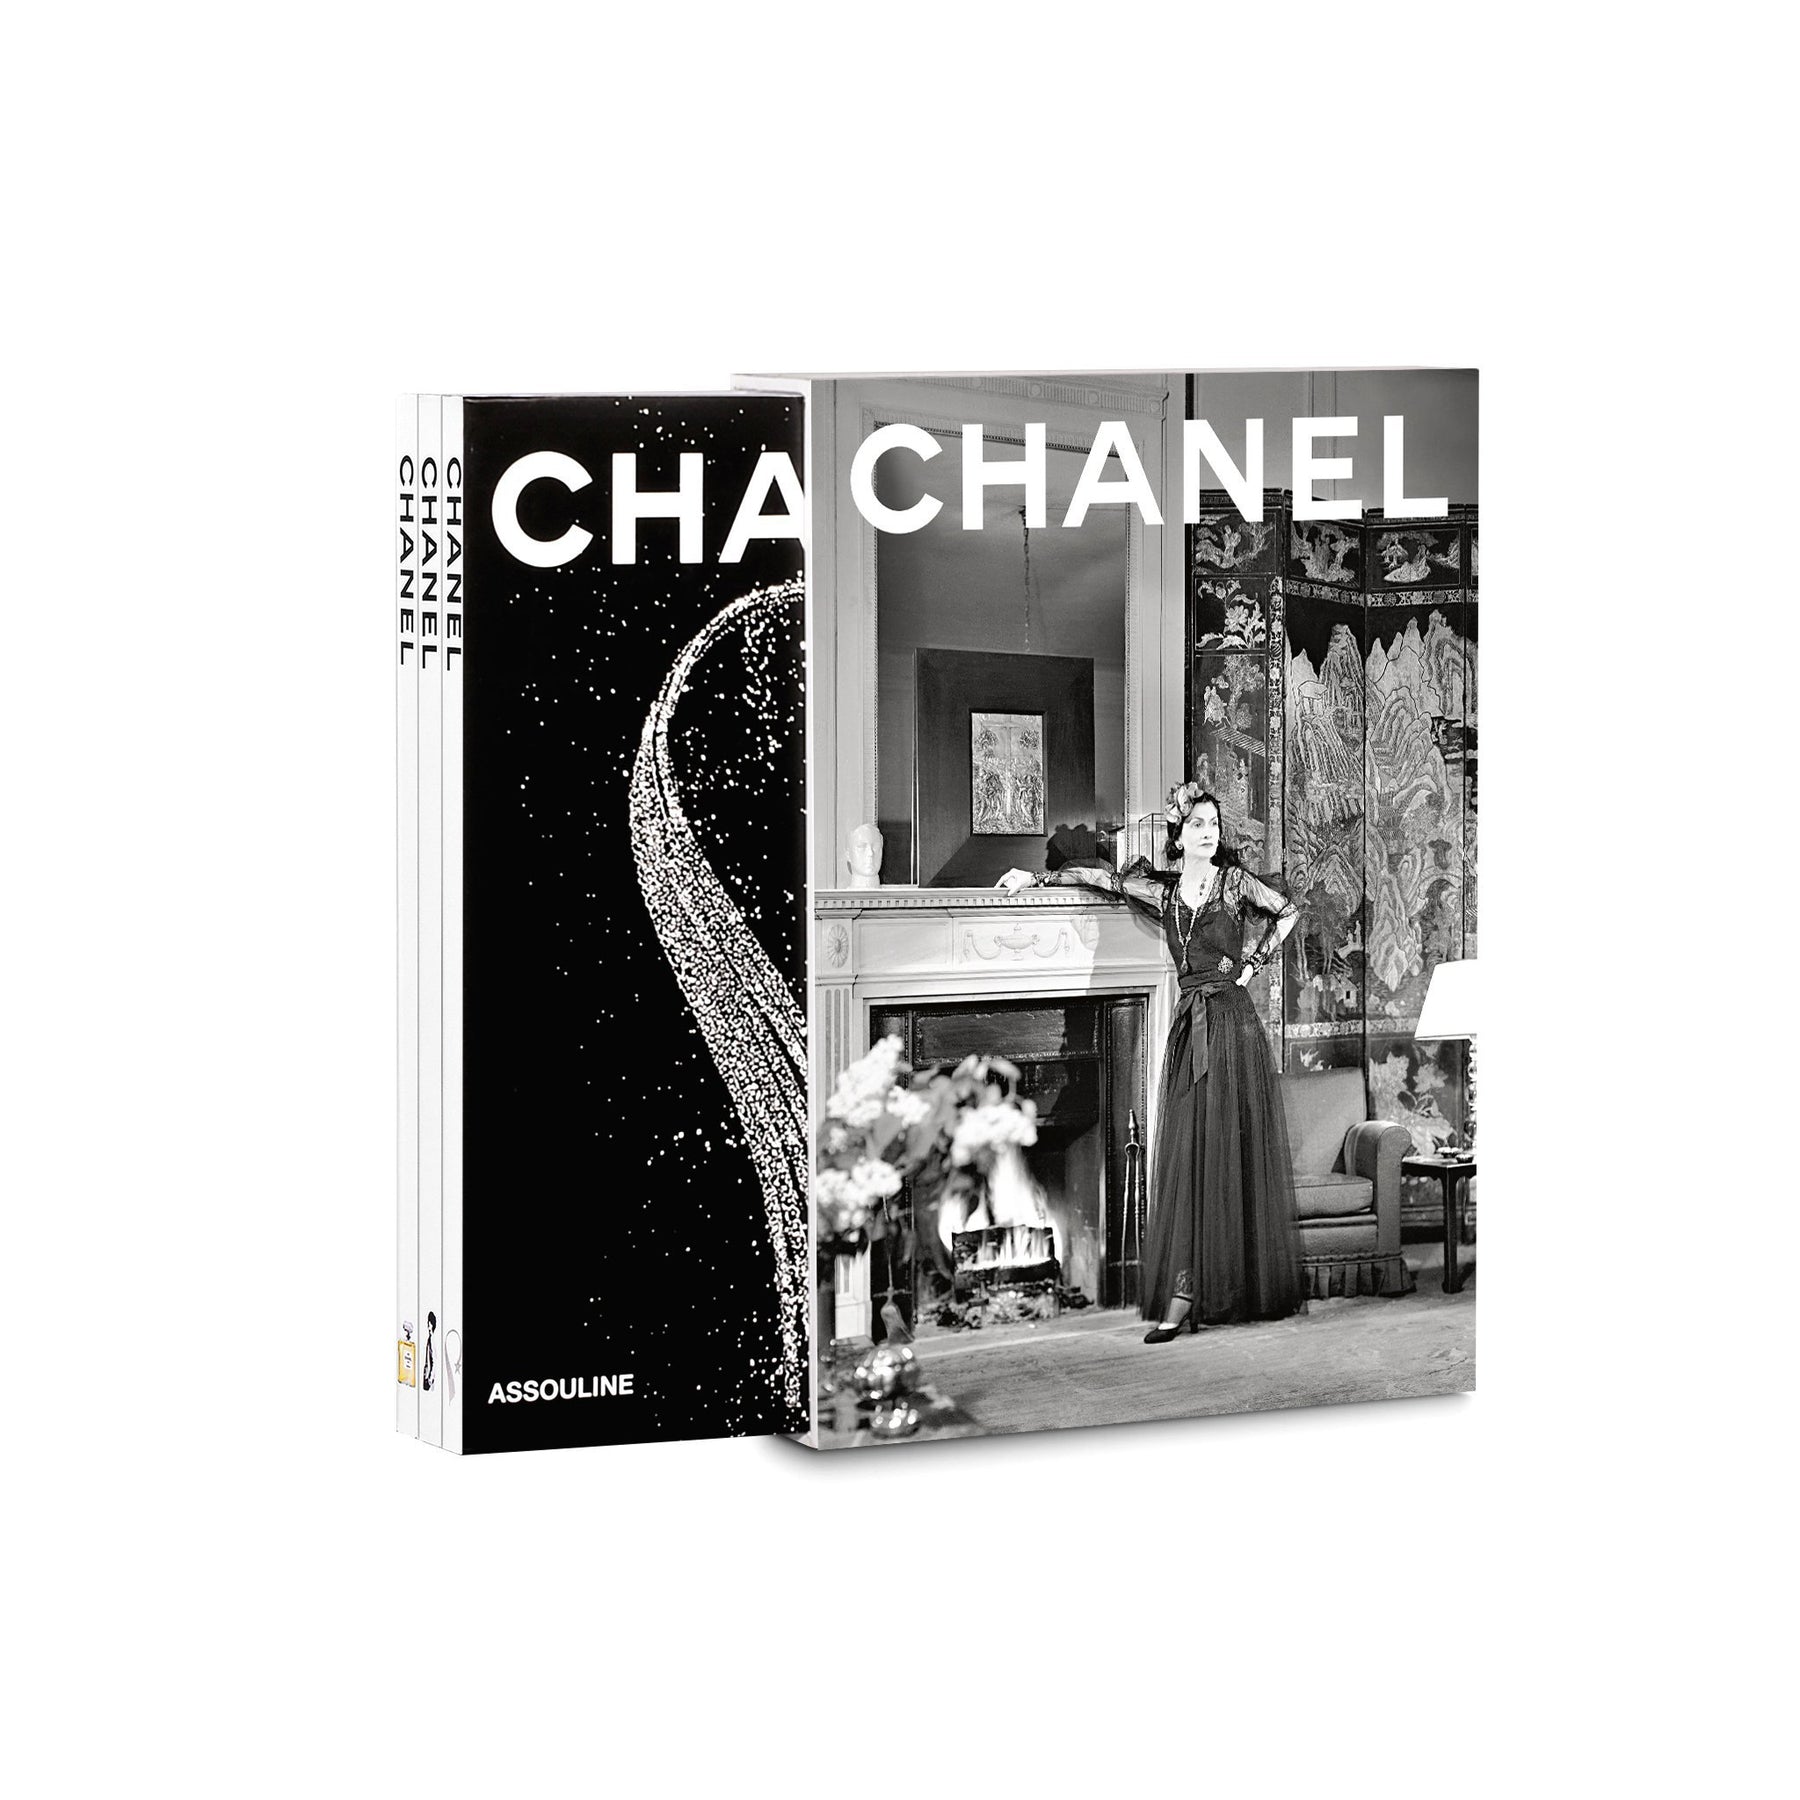 CARTOP MOOK Hermes / Louis Vuitton / Chanel 3 book set from Japan